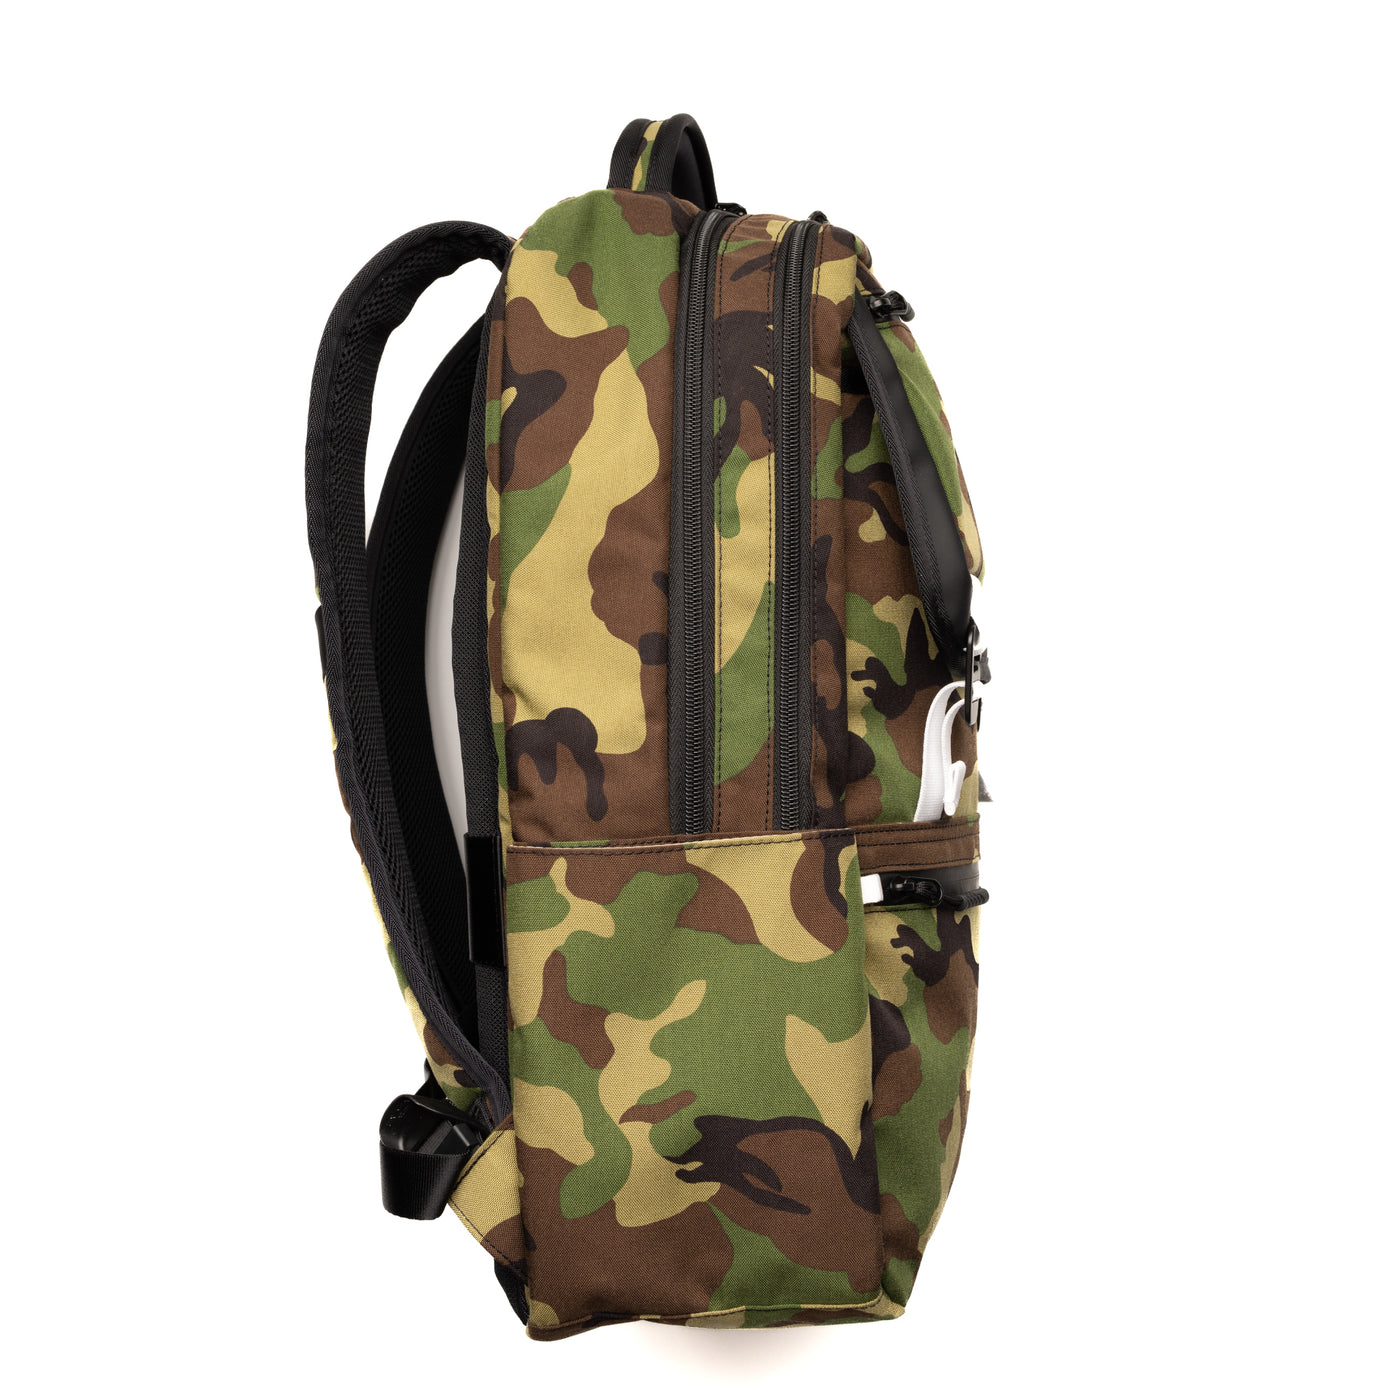 A2 Backpack - Cordura Camo